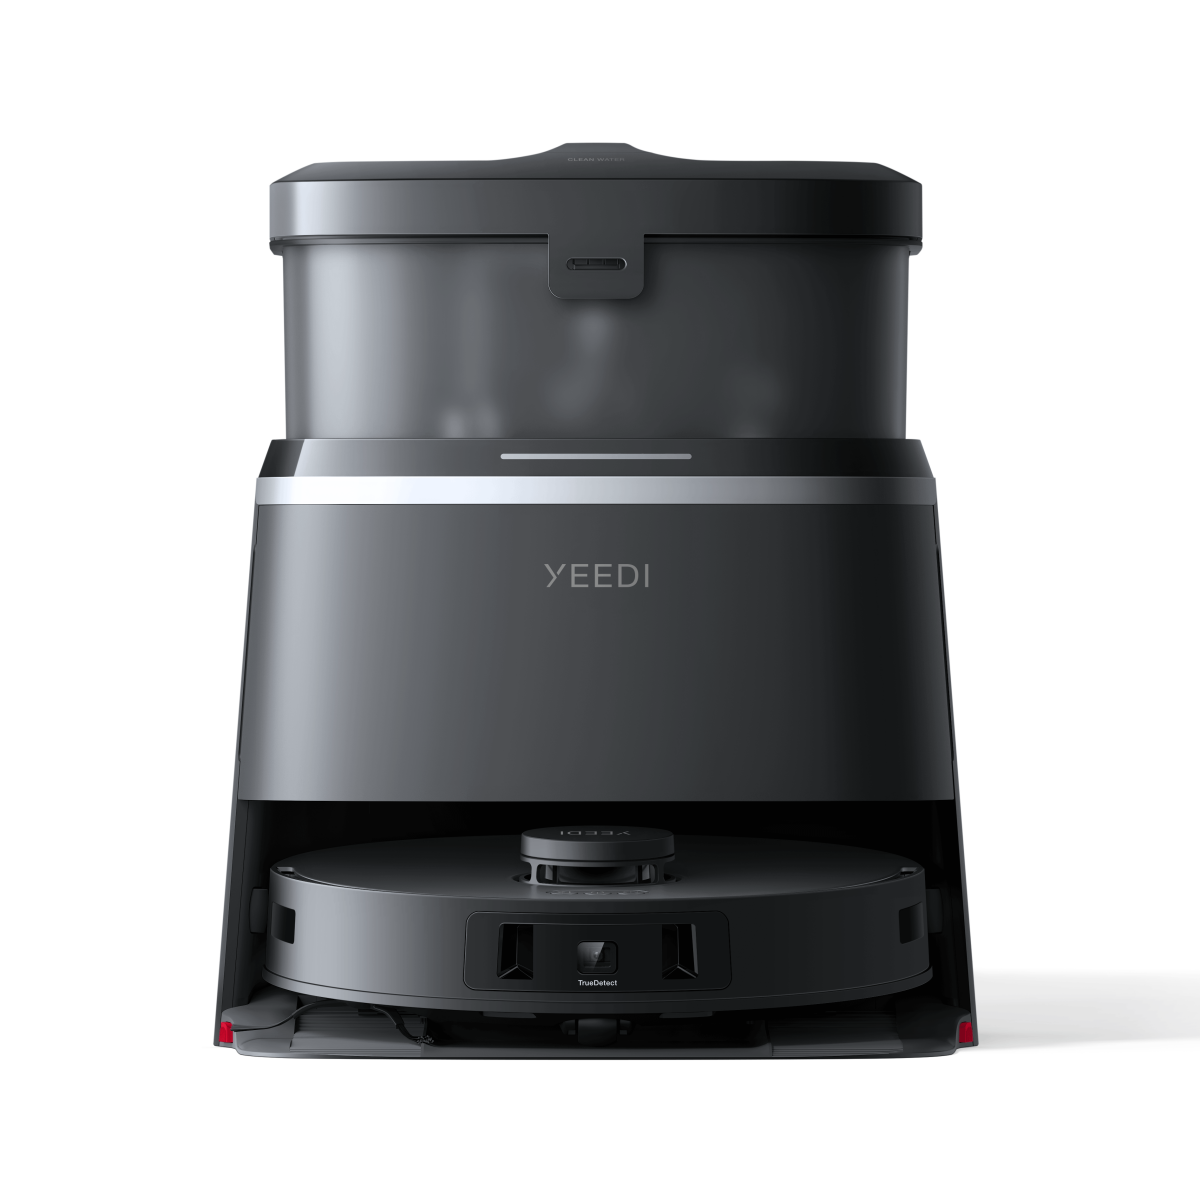 The YEEDI M12 Pro+ robot vacuum